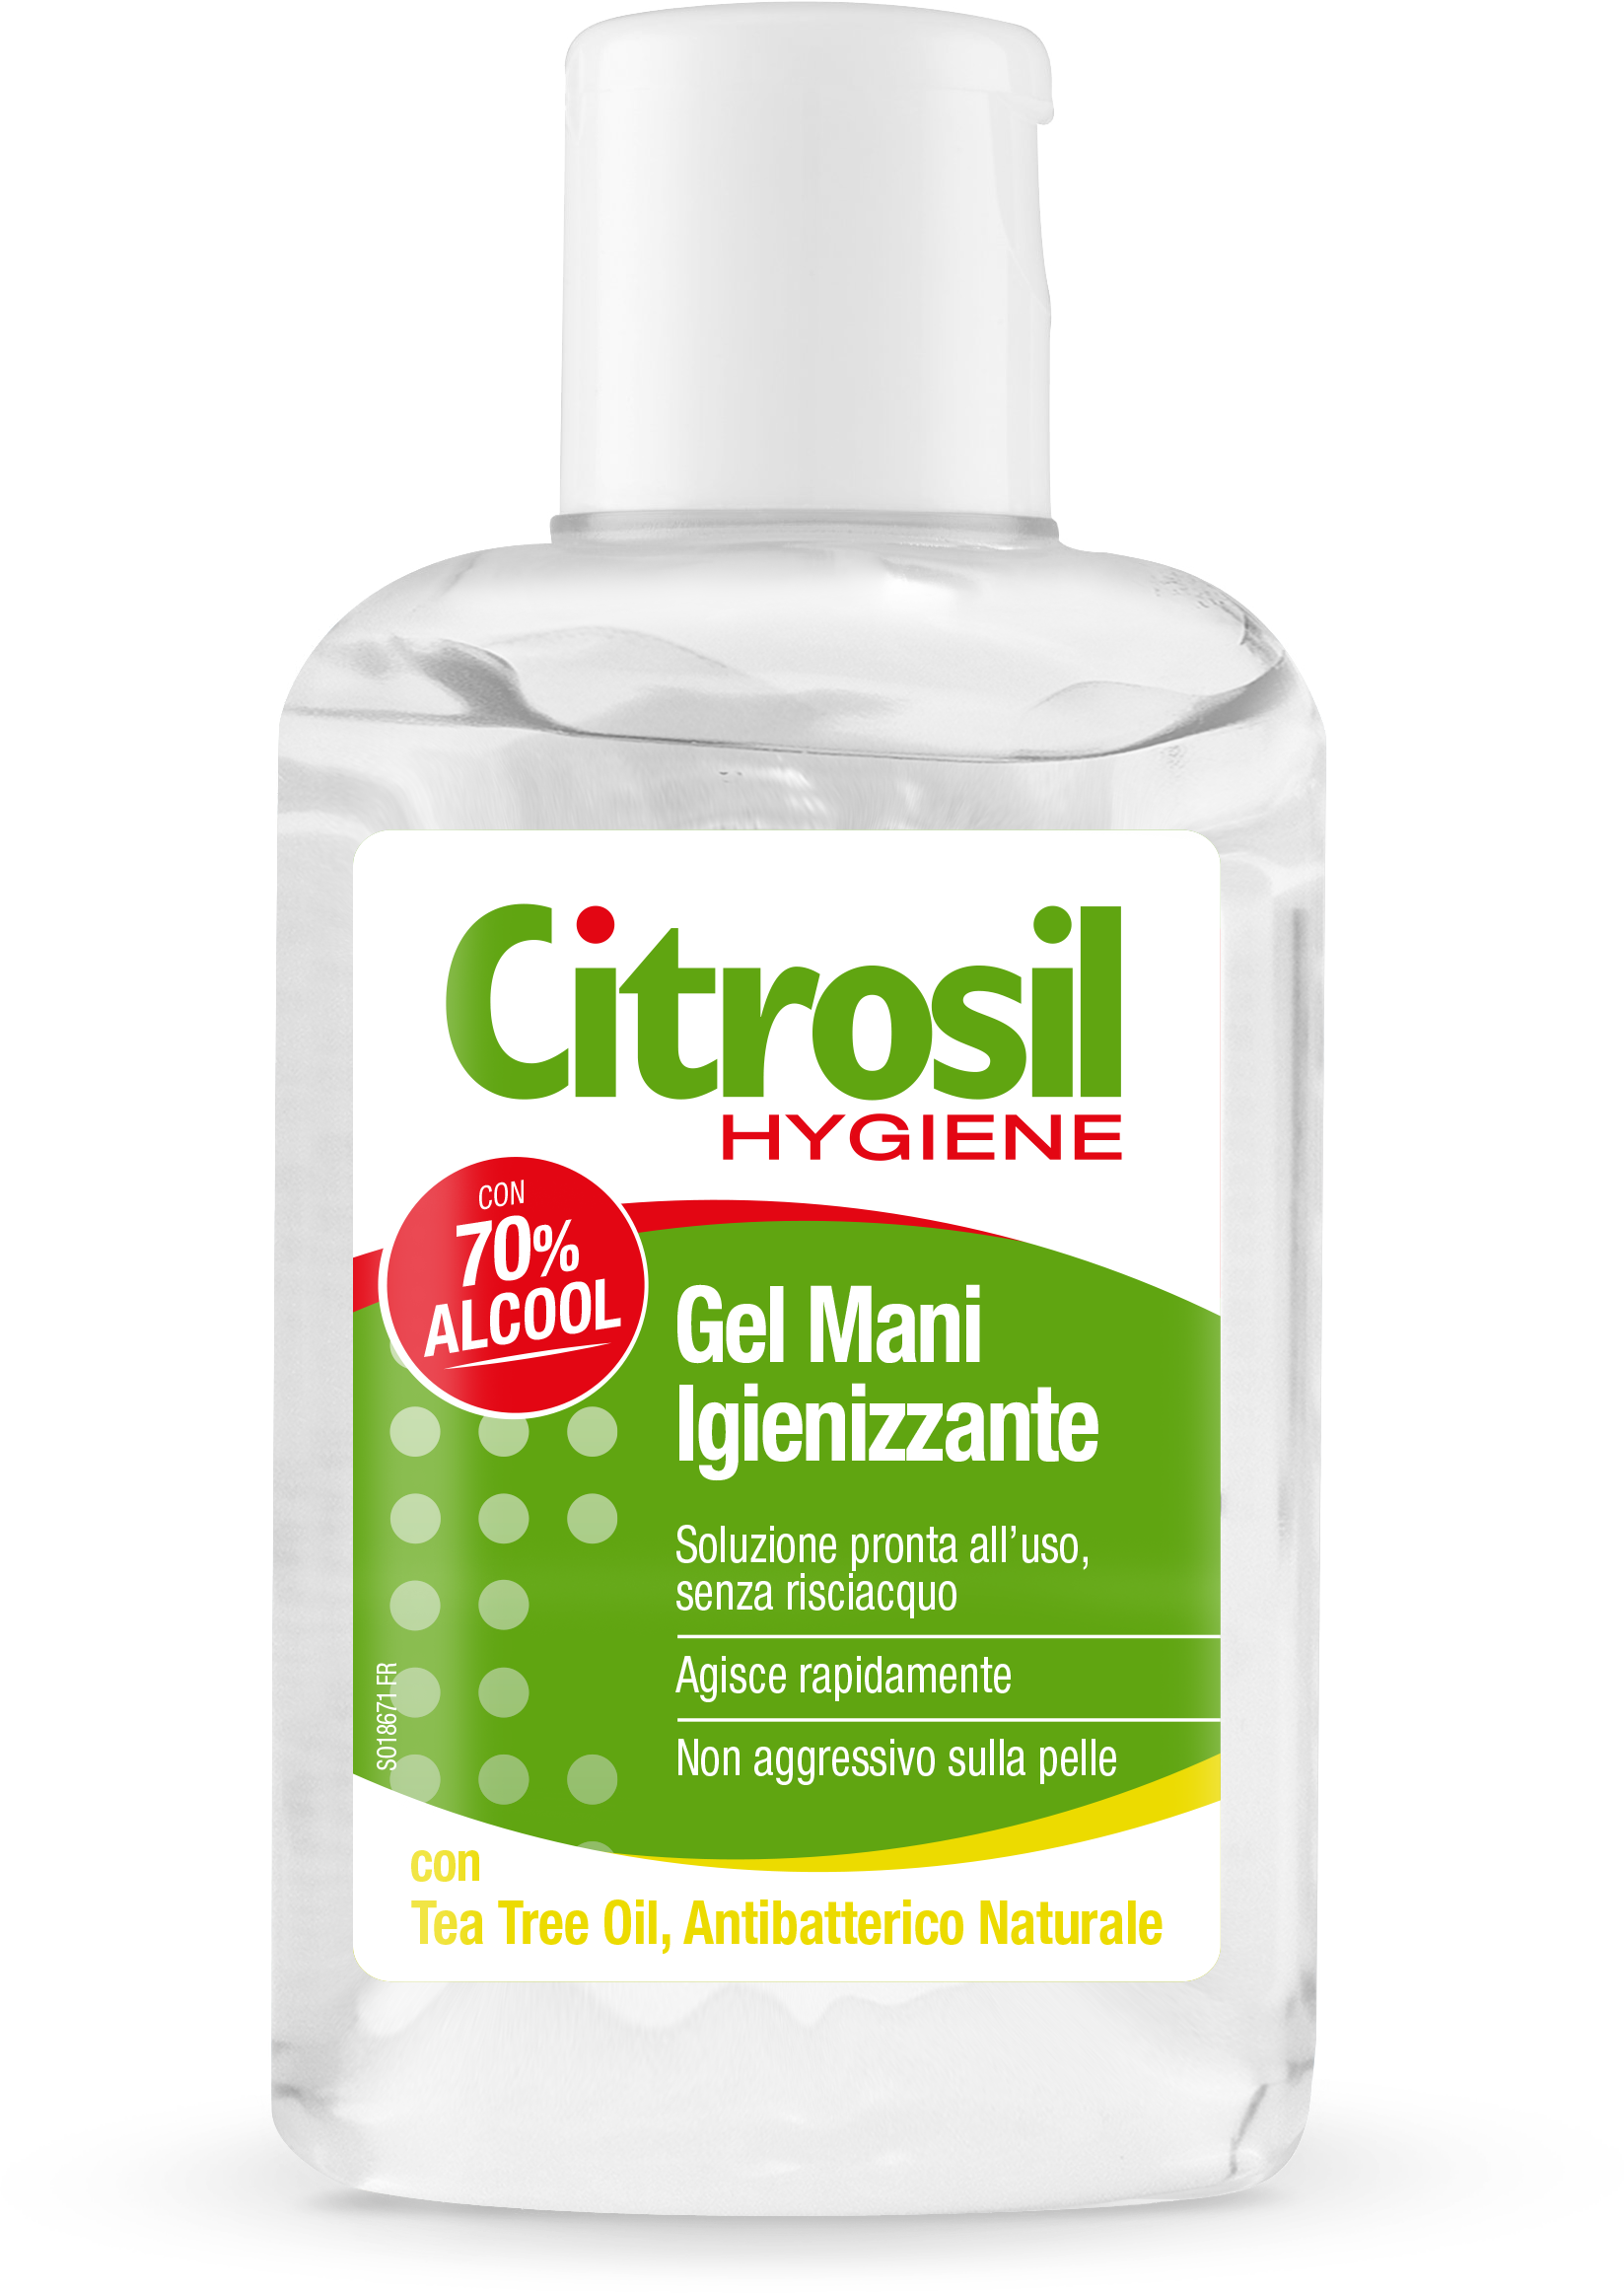 Image of Gel Mani Igienizzante Citrosil Hygiene 80ml